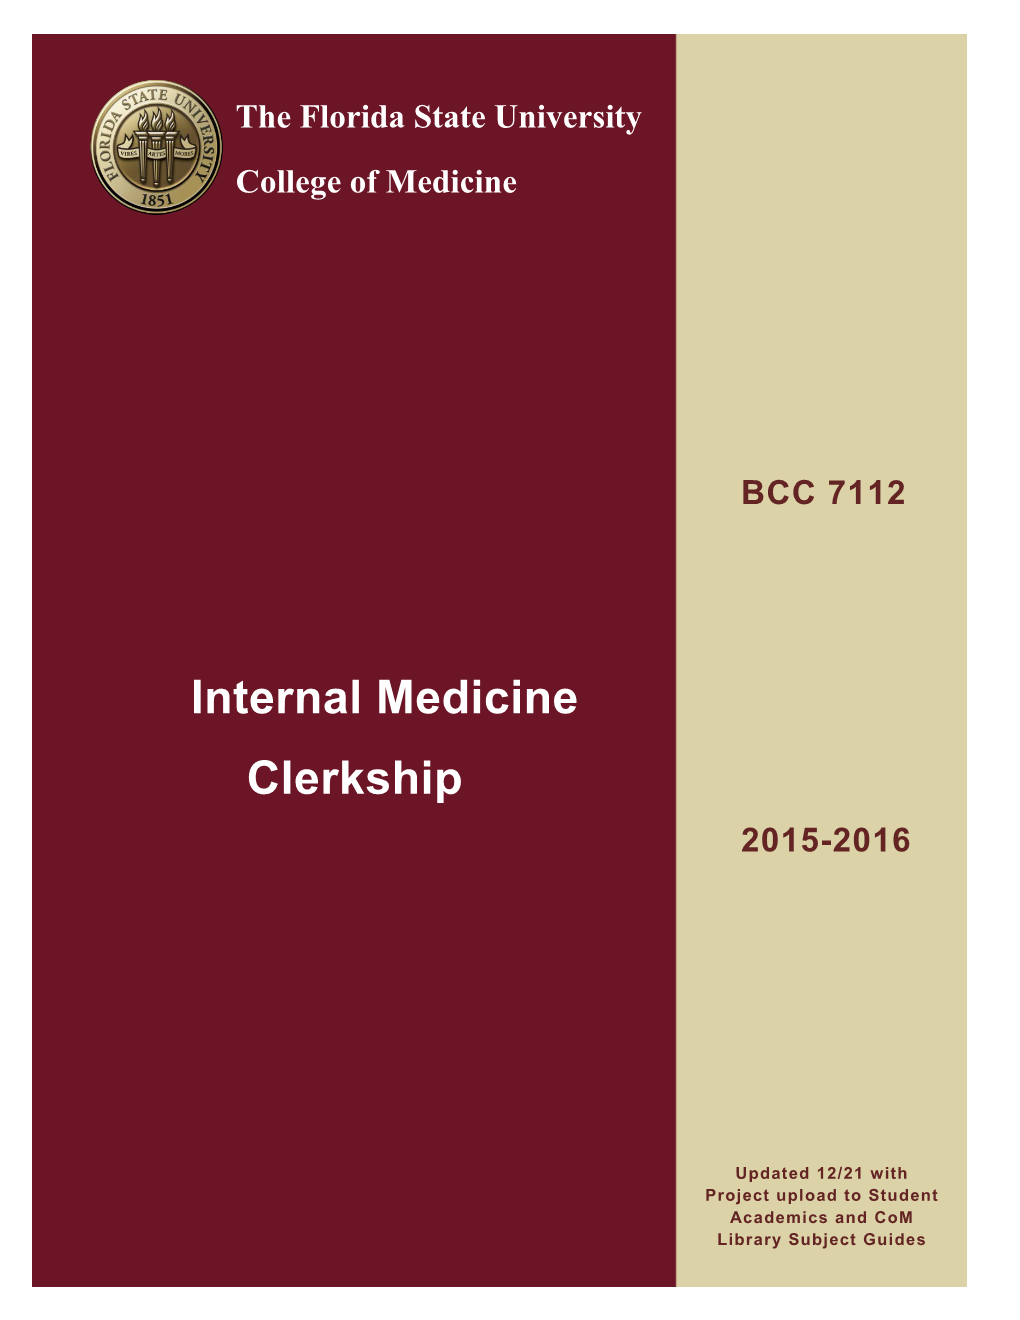 Internal Medicine Syllabus 2015-16 Rev12-21.Pdf